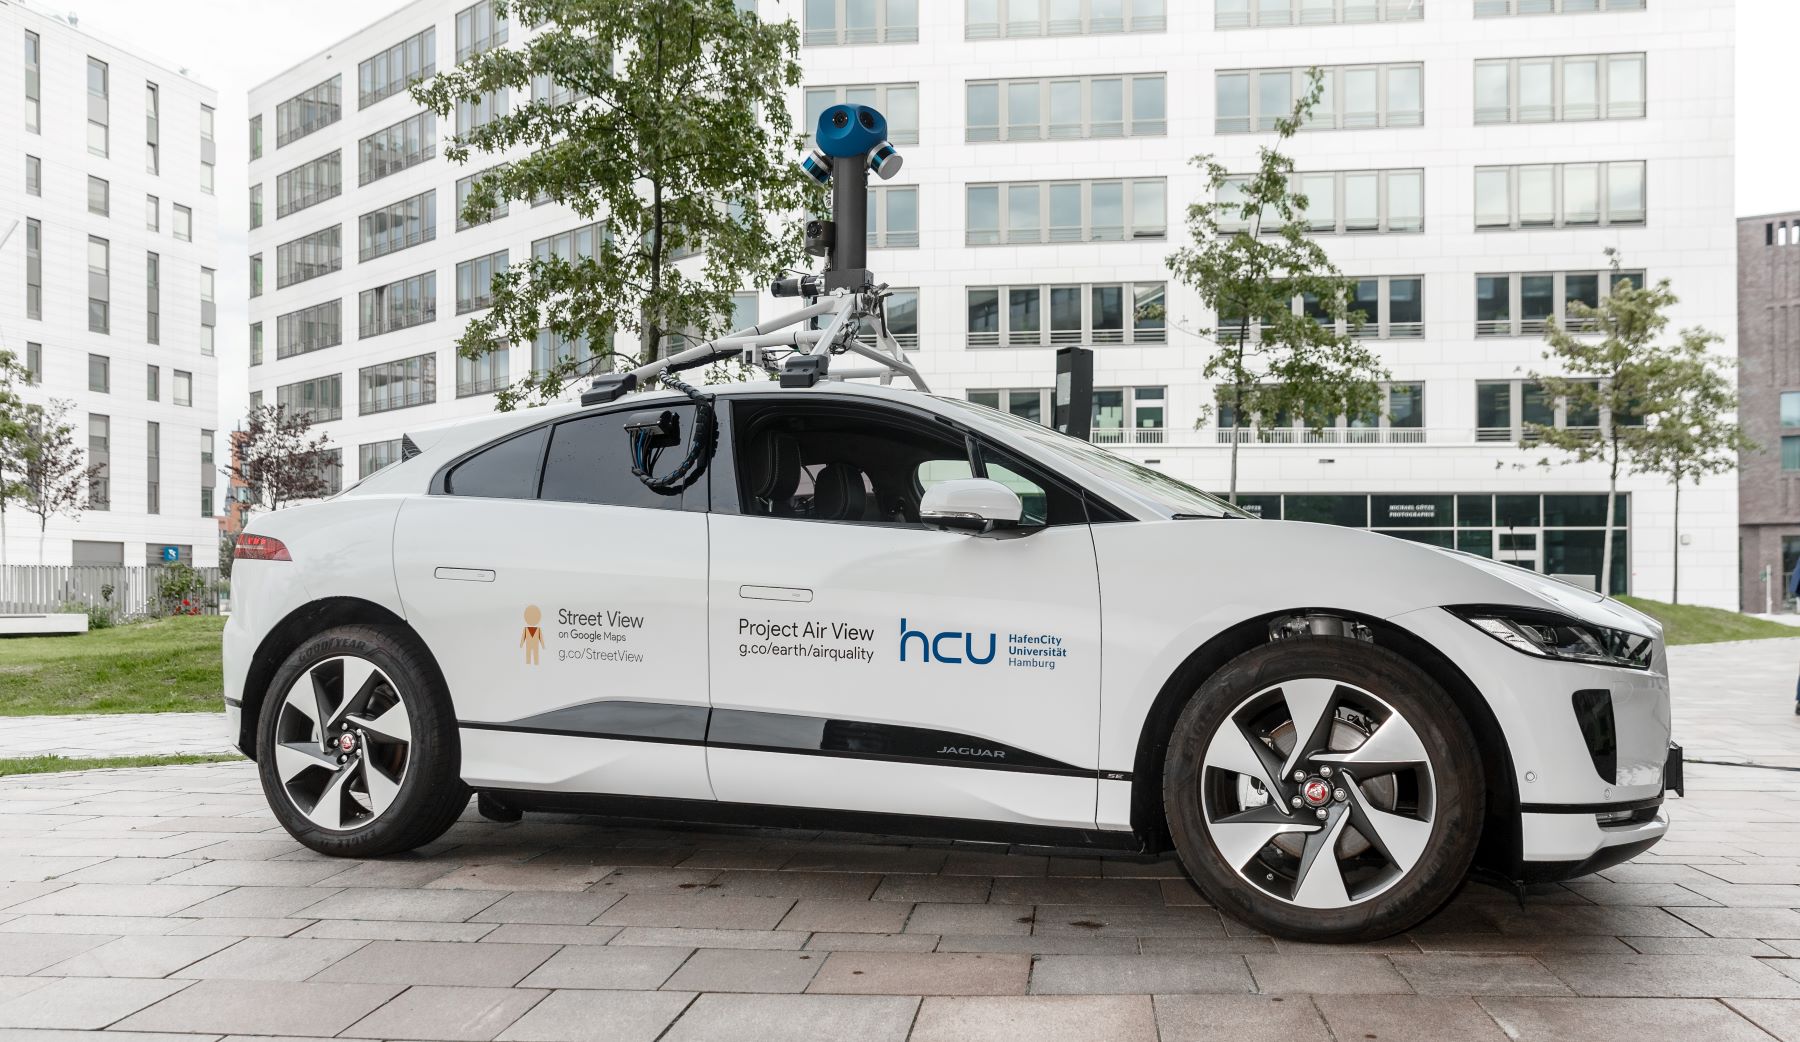 A Google eco-friendly EV debuting in Hafencity of Hamburg, Germany